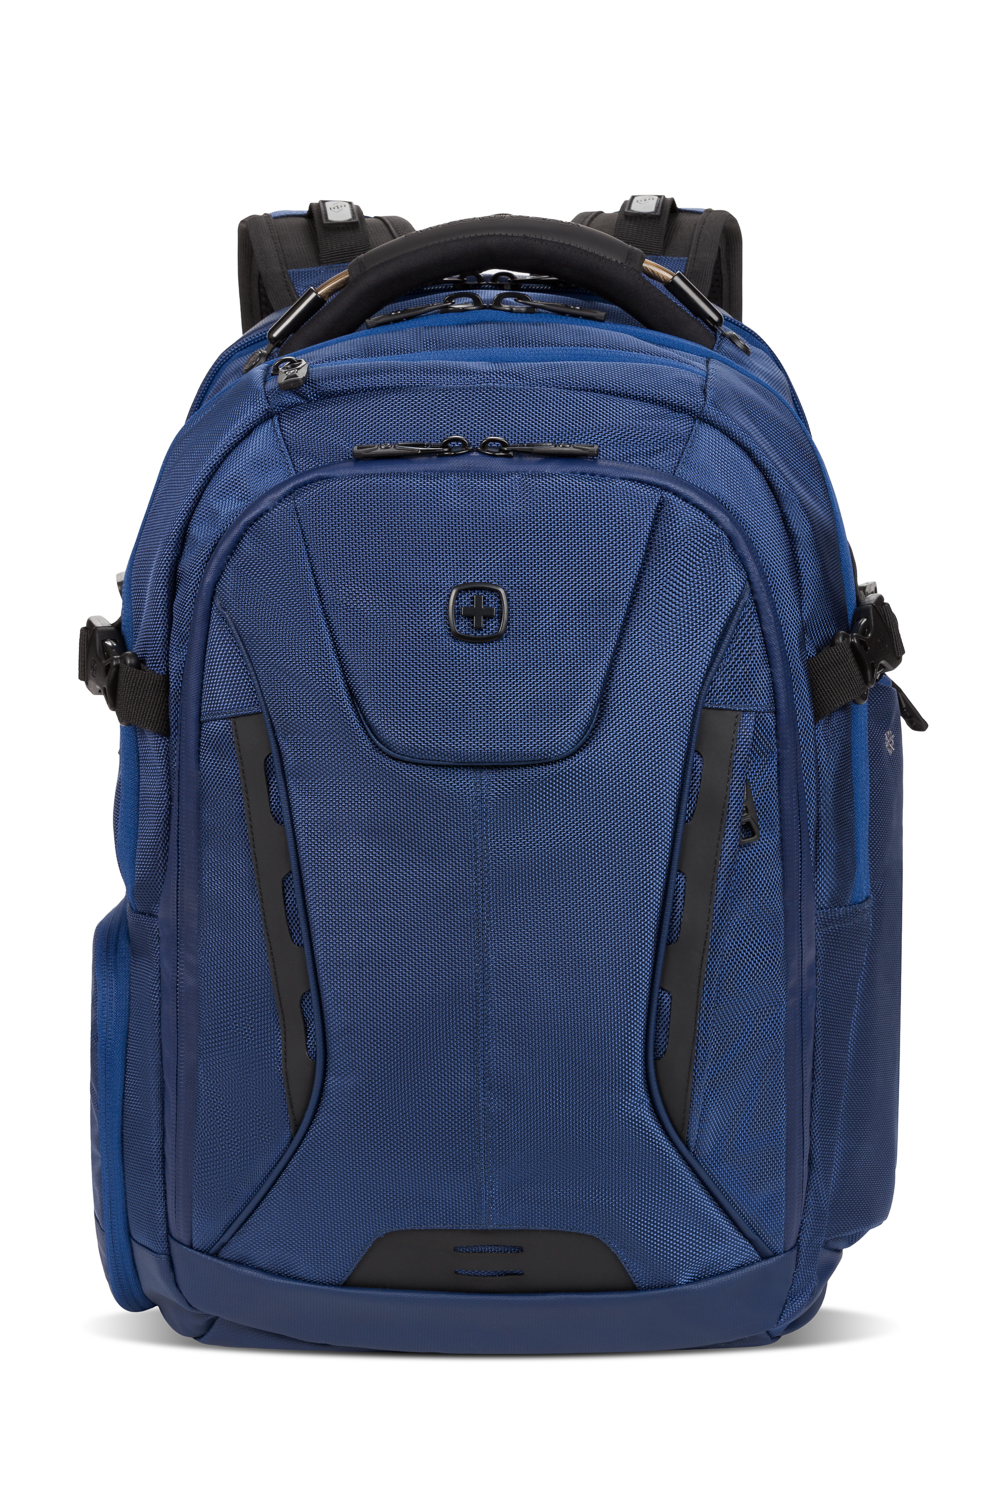 Swissgear 5358 USB ScanSmart Laptop Backpack - Ballistic Navy Blue